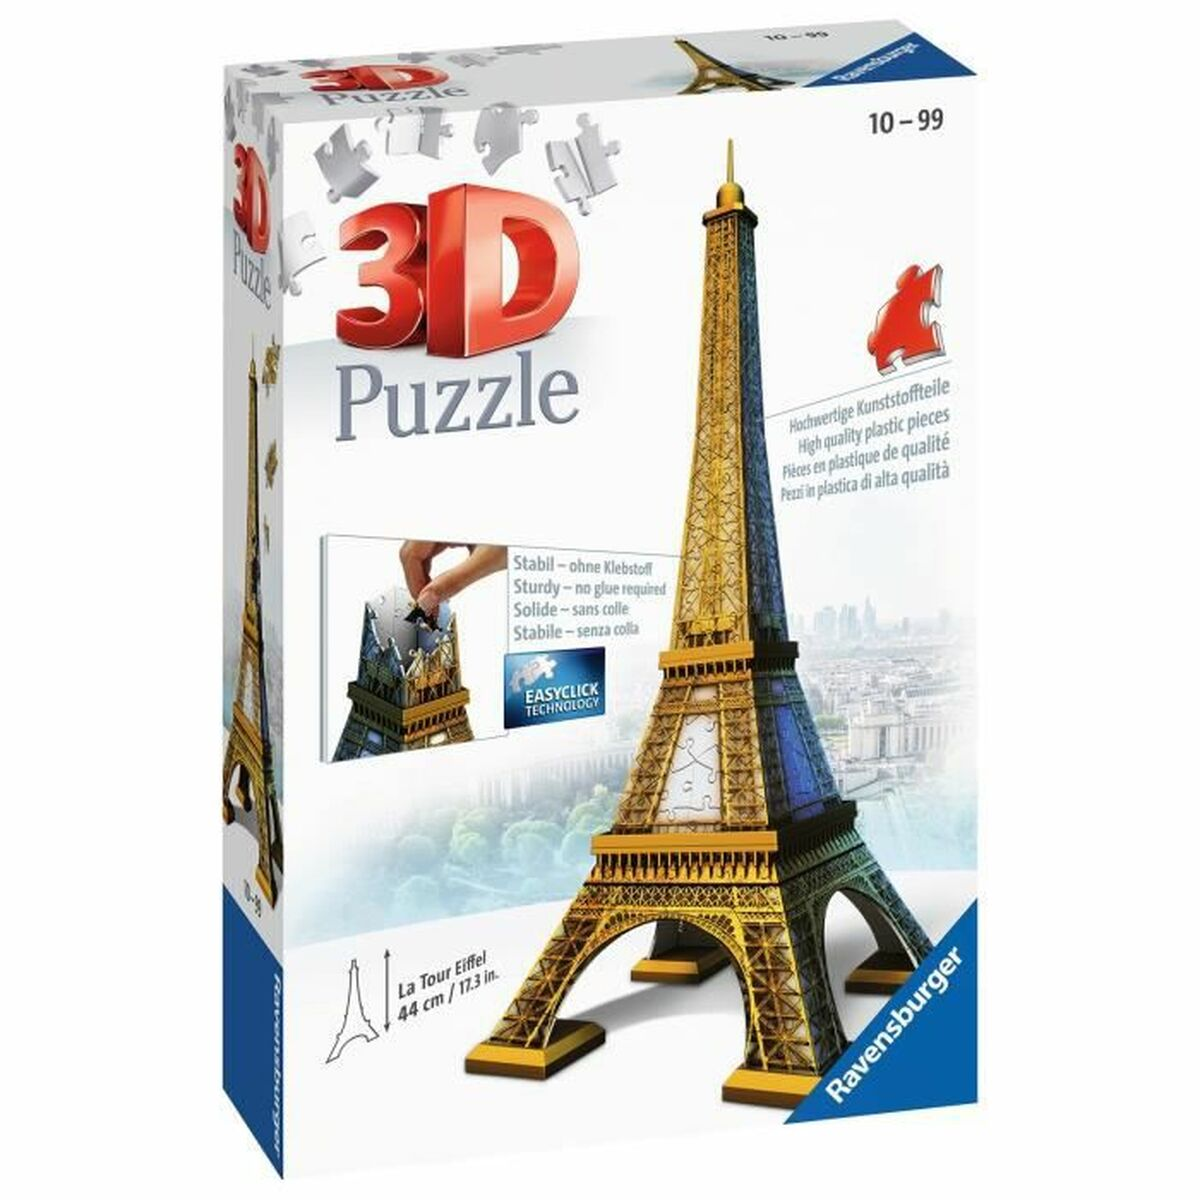 3D Puzzle 12556 Mehrfarbig RAVENSBURGER EIFFELTURM